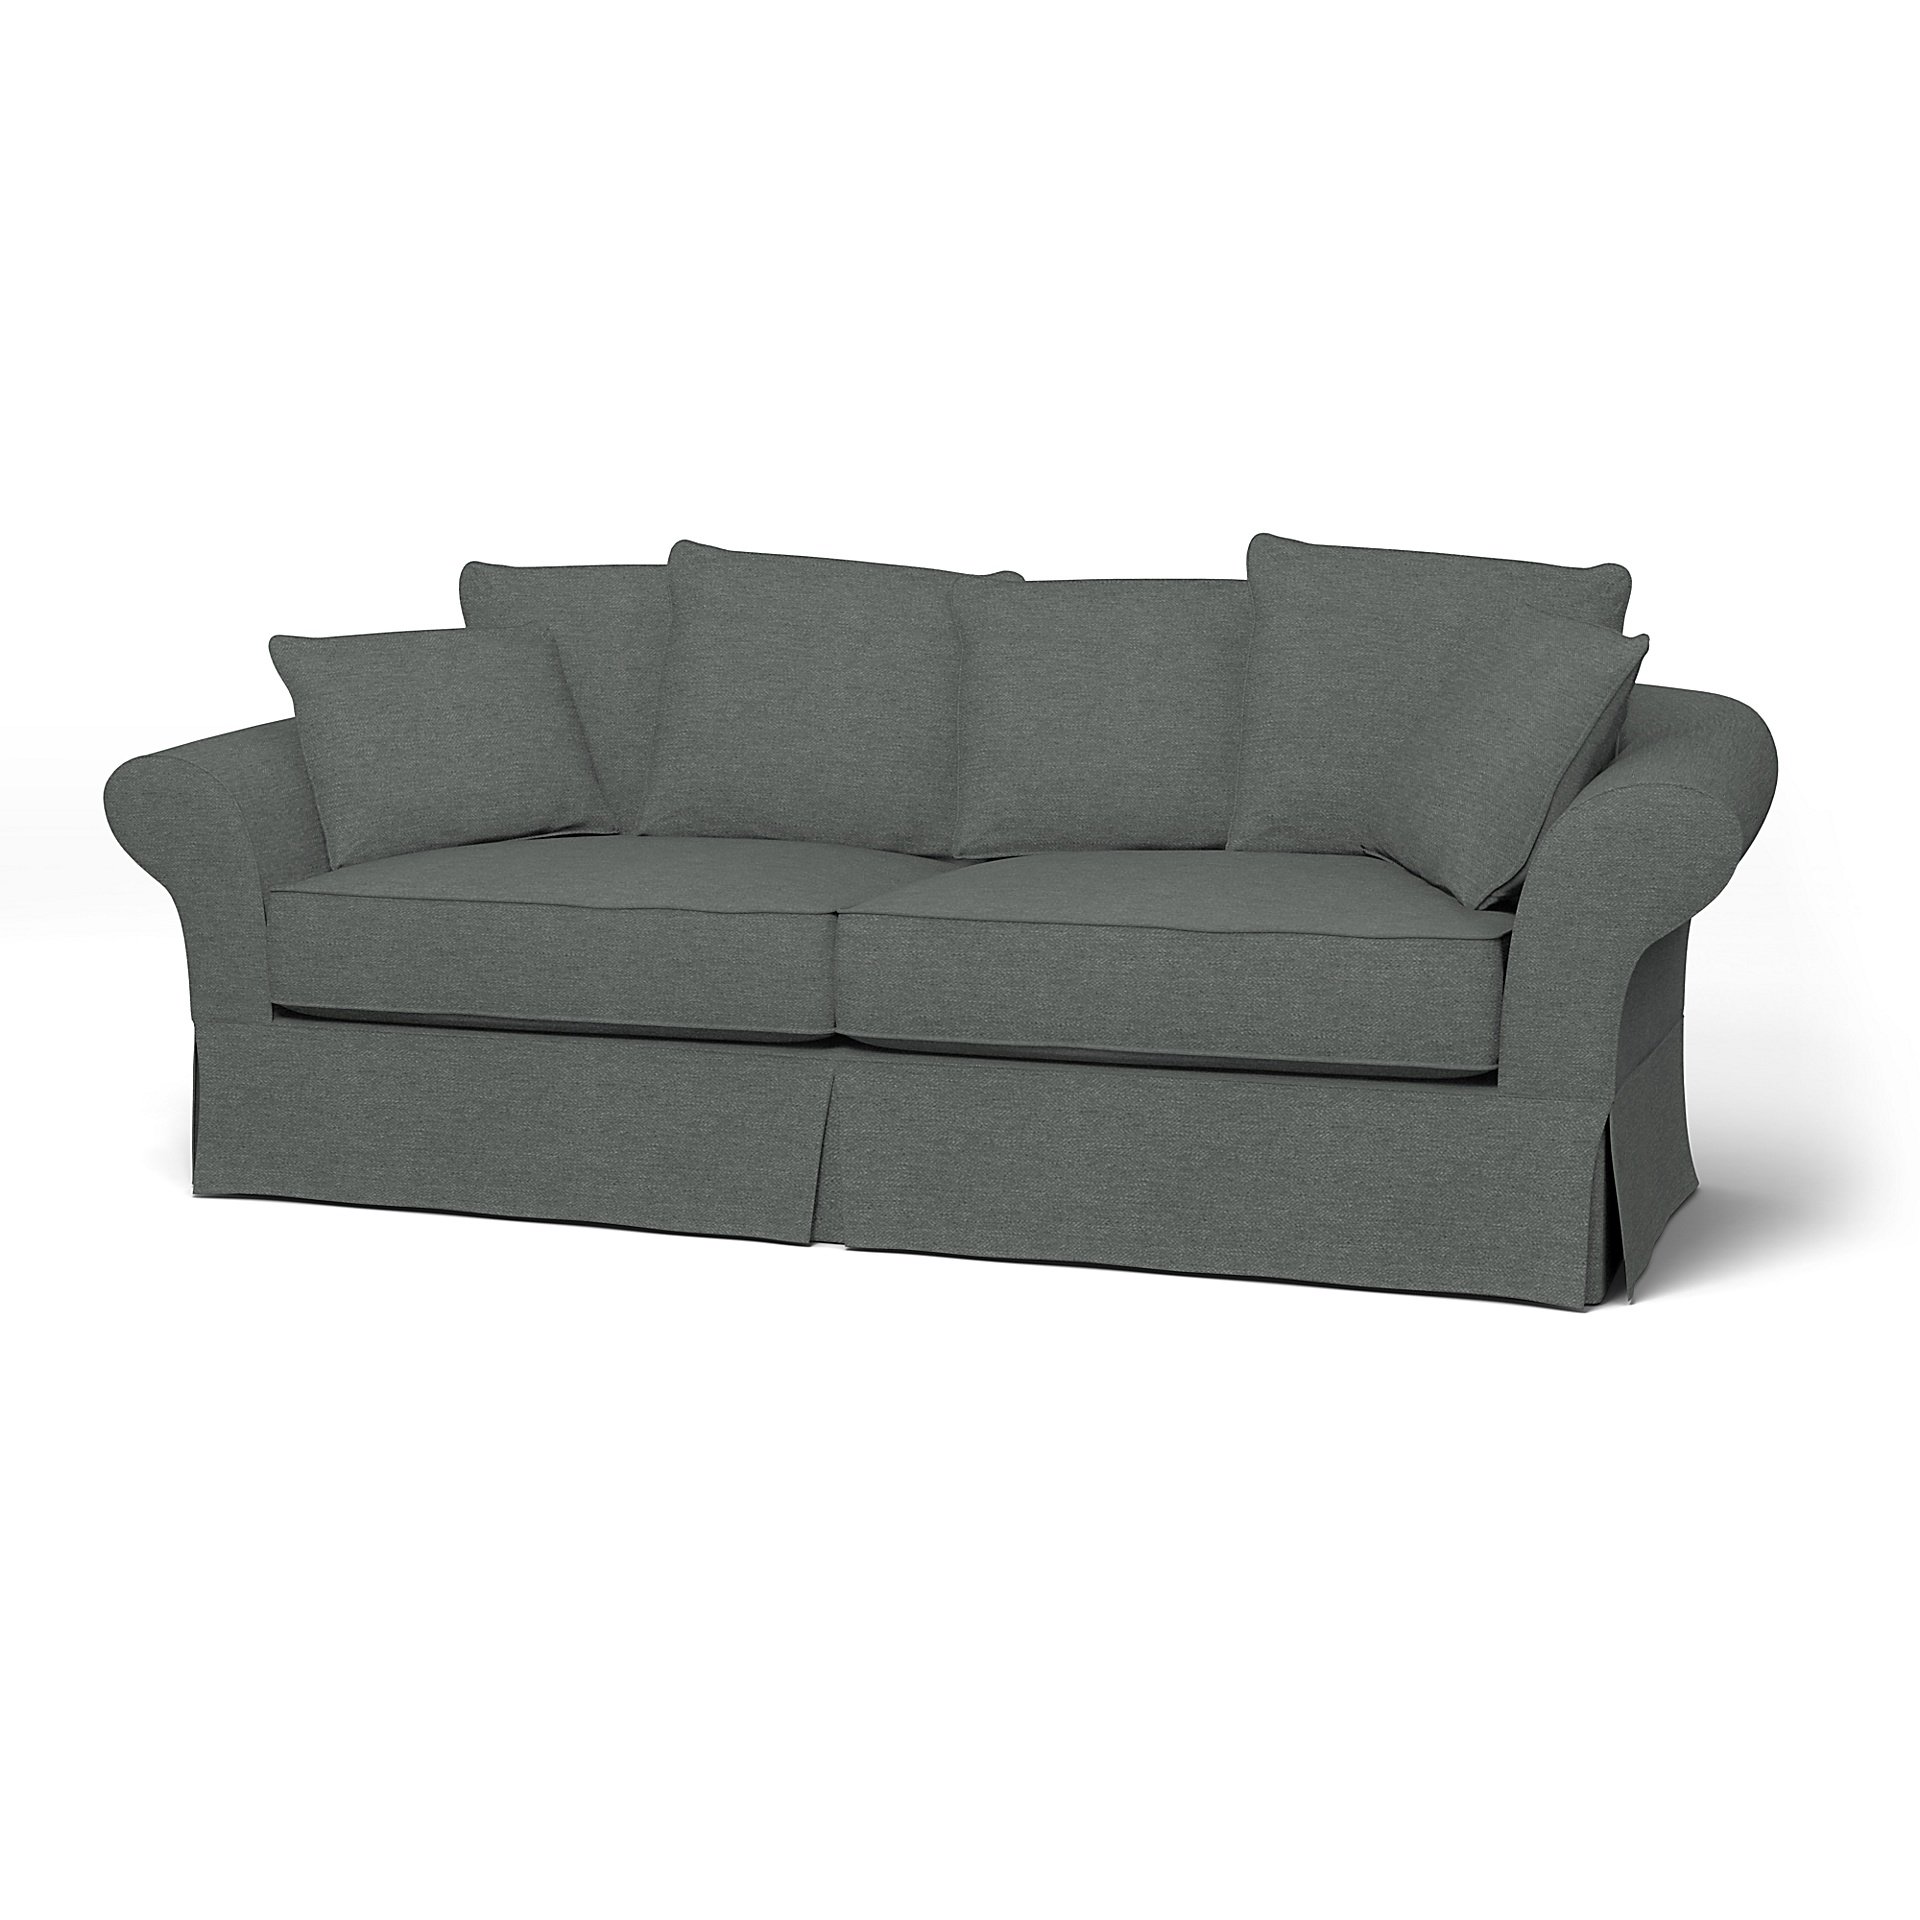 IKEA - Backamo 3 Seater Sofa Cover, Laurel, Boucle & Texture - Bemz